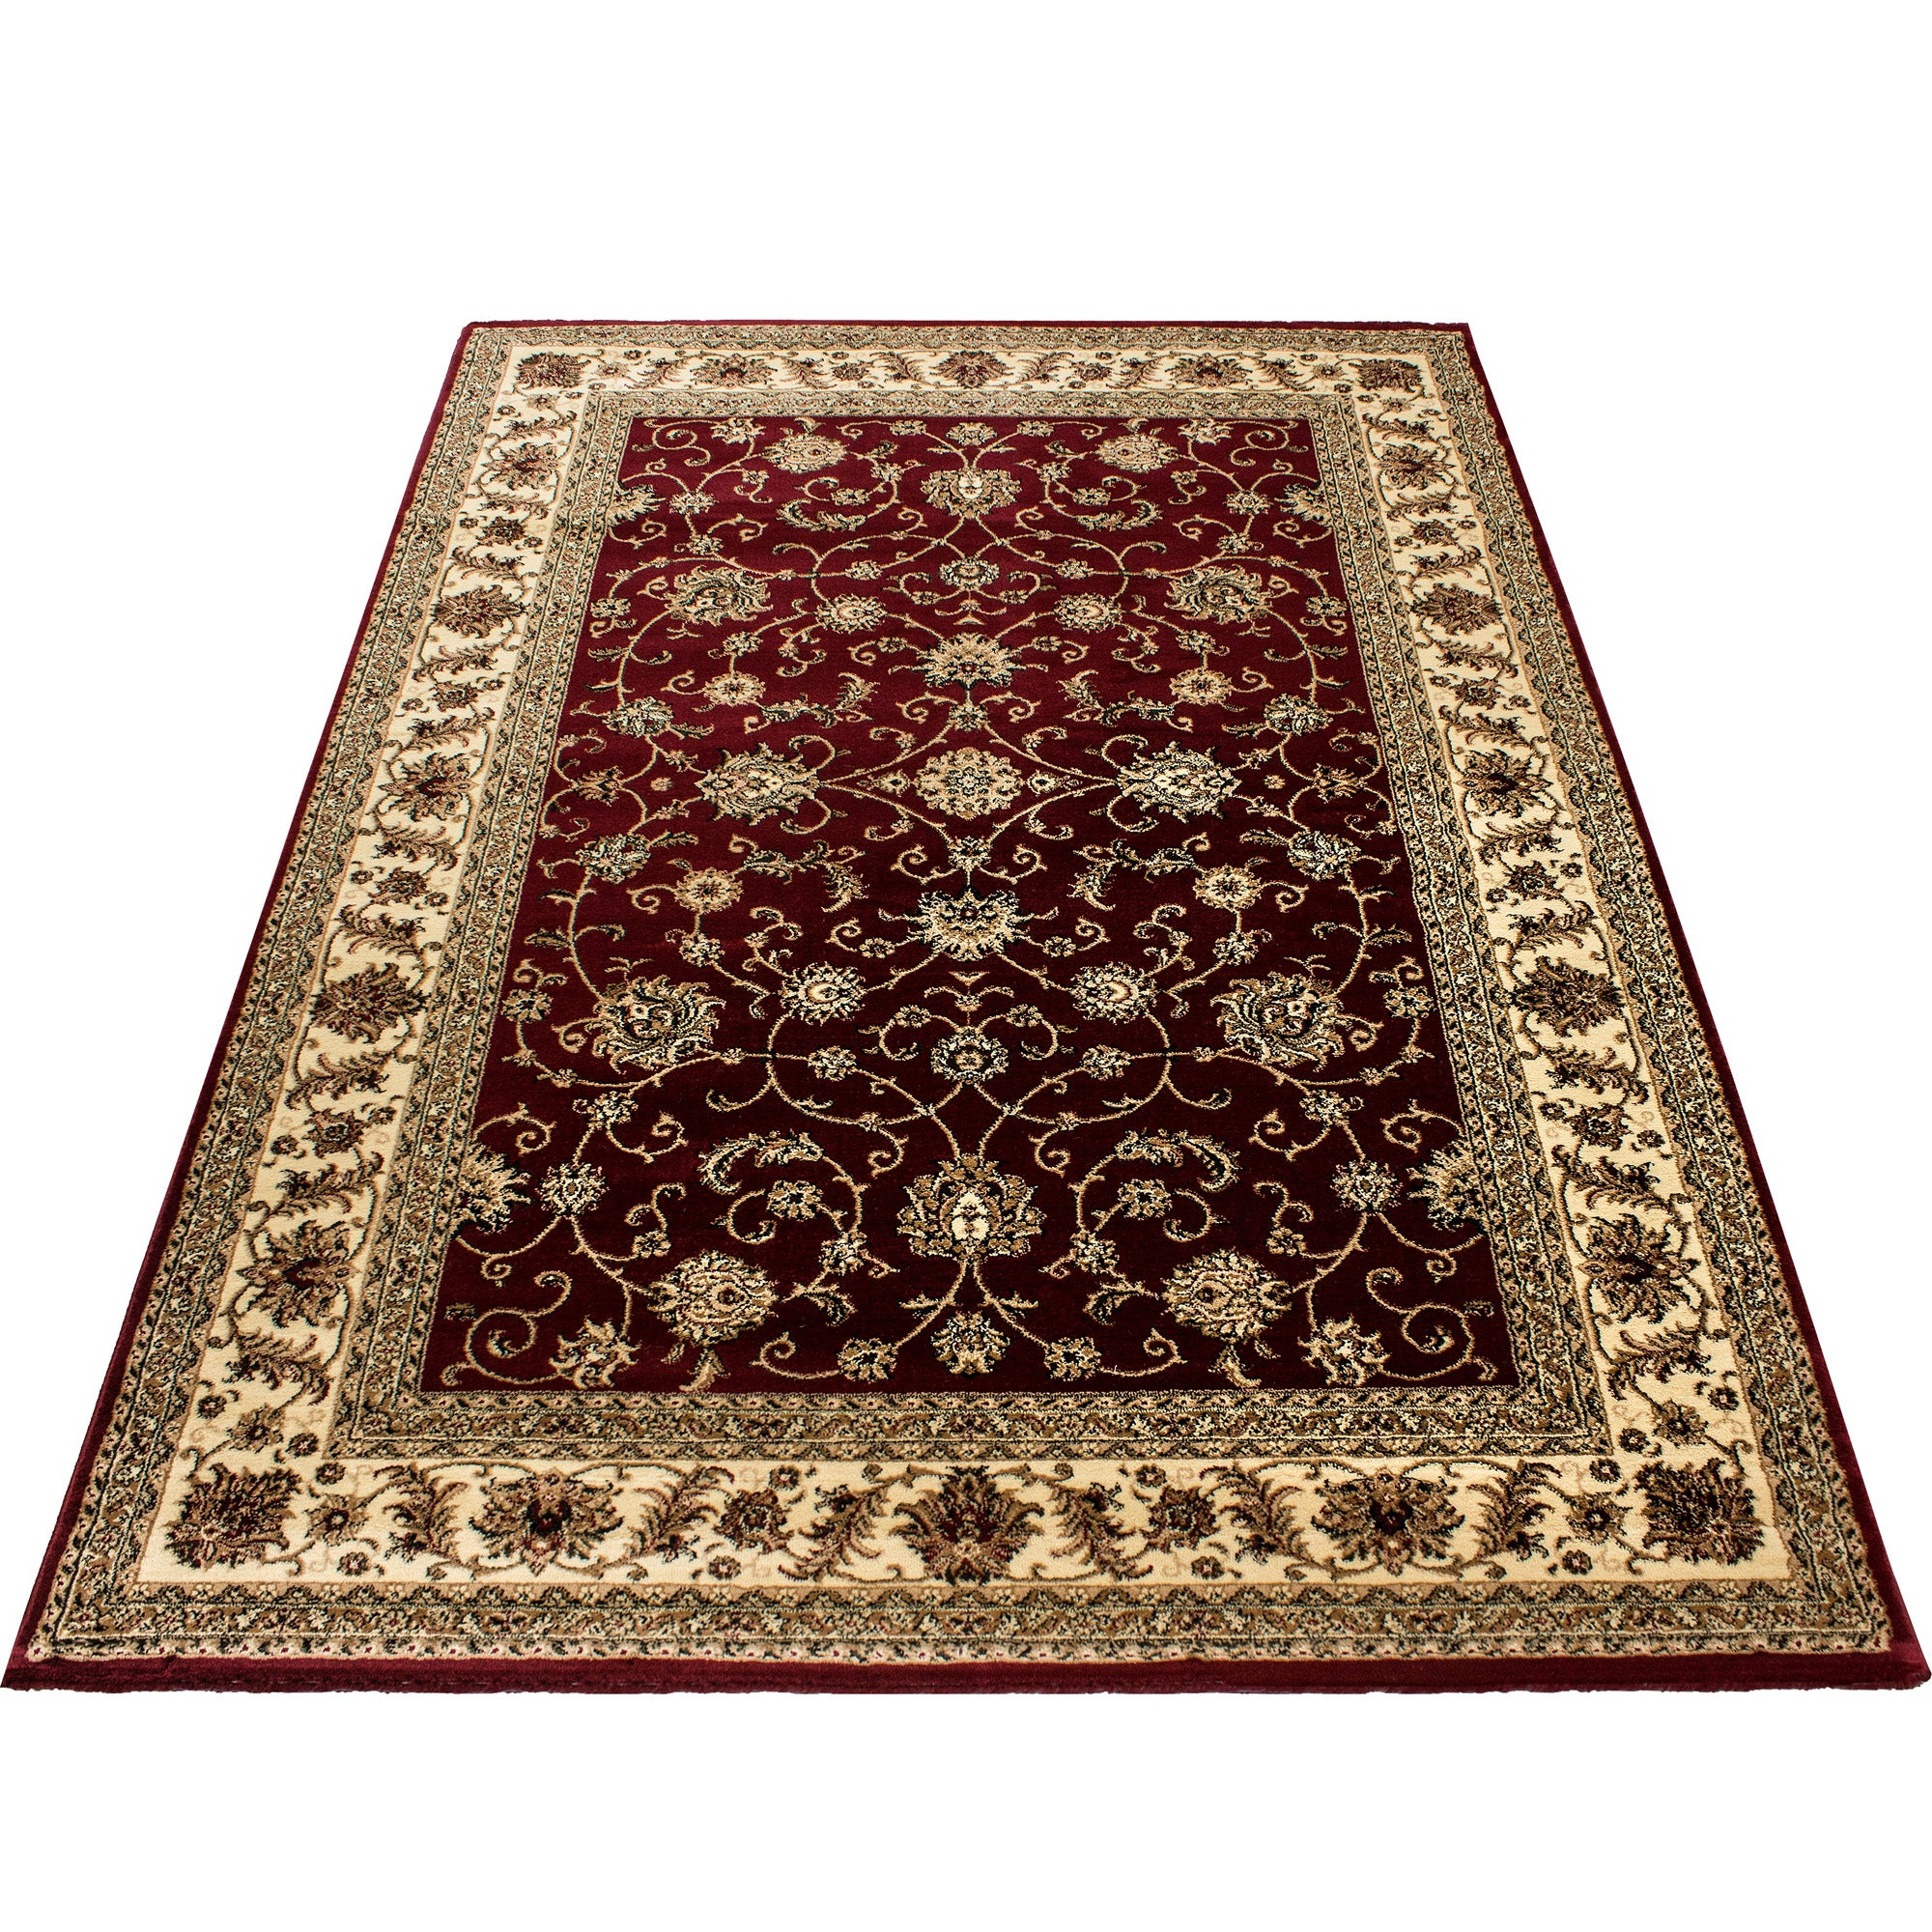 Orinet carpet classic look woven carpet oriental design carpet living room